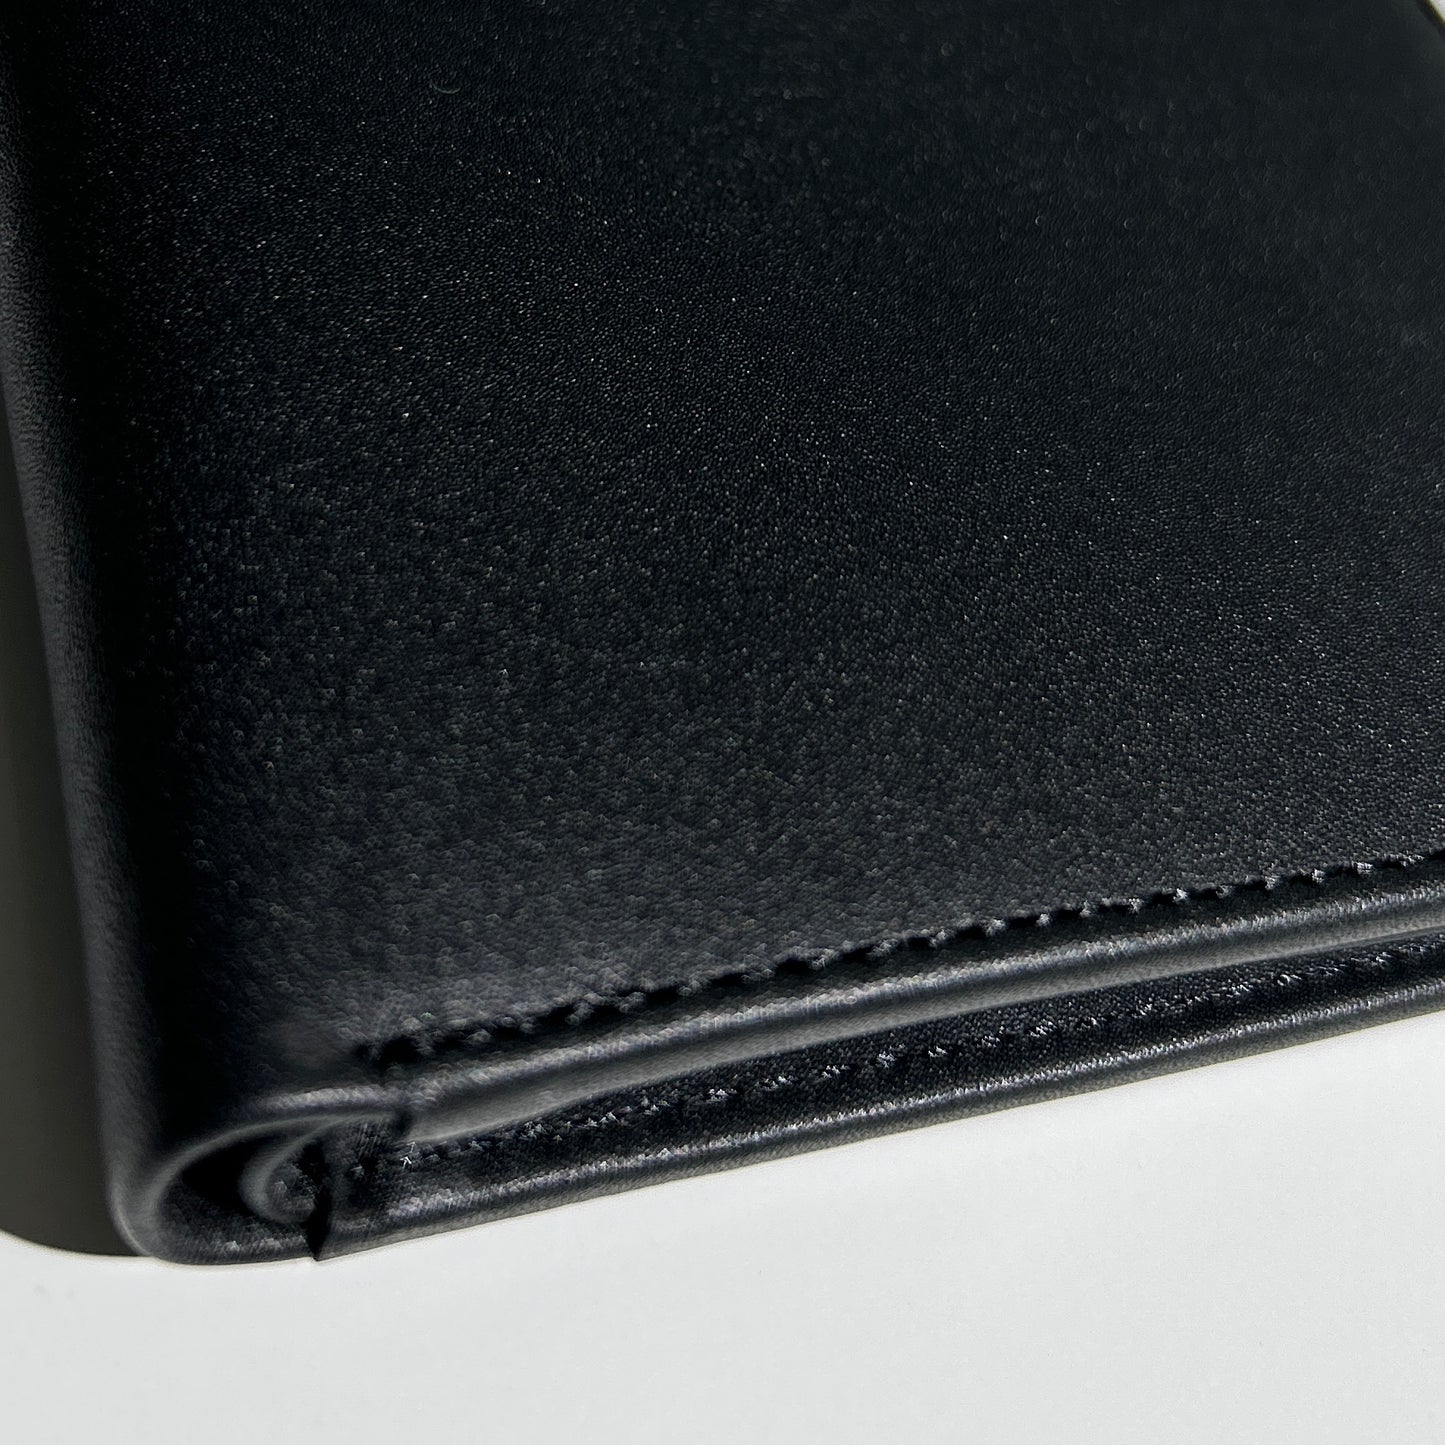 WM129X - Cow leather wallet 印度製頭層牛皮銀包